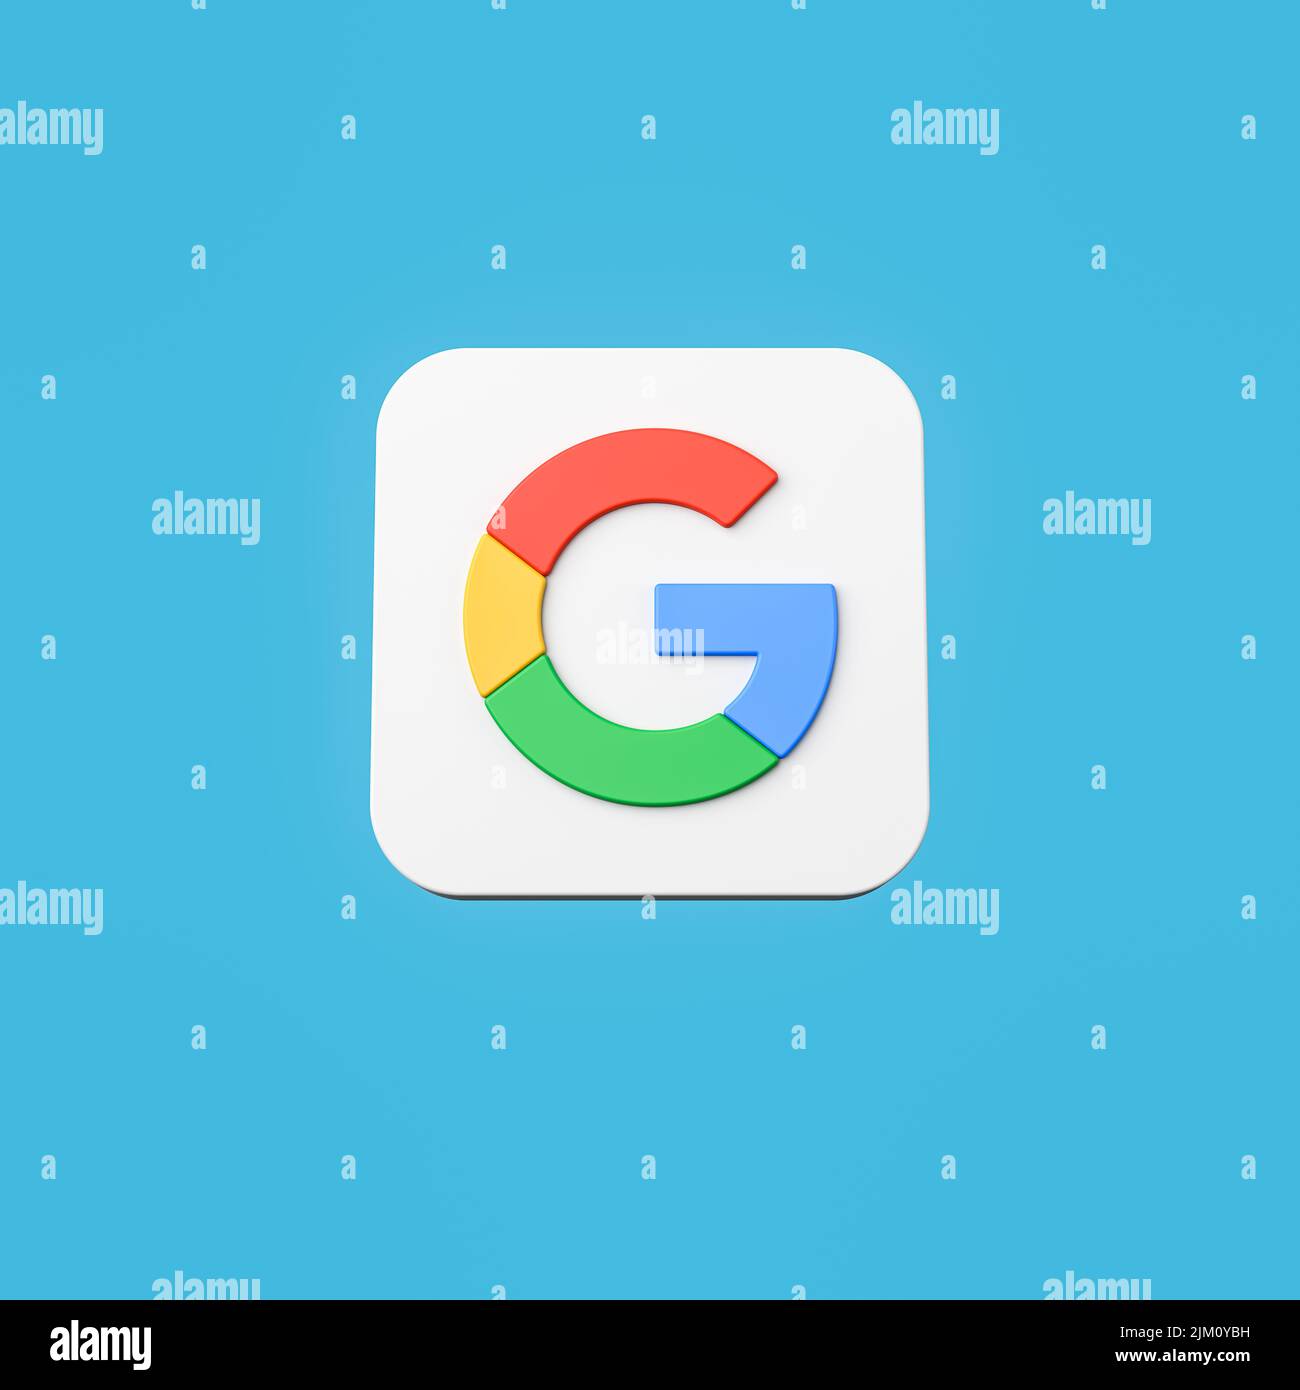 Google App Icon on Flat Blue Background Stock Photo